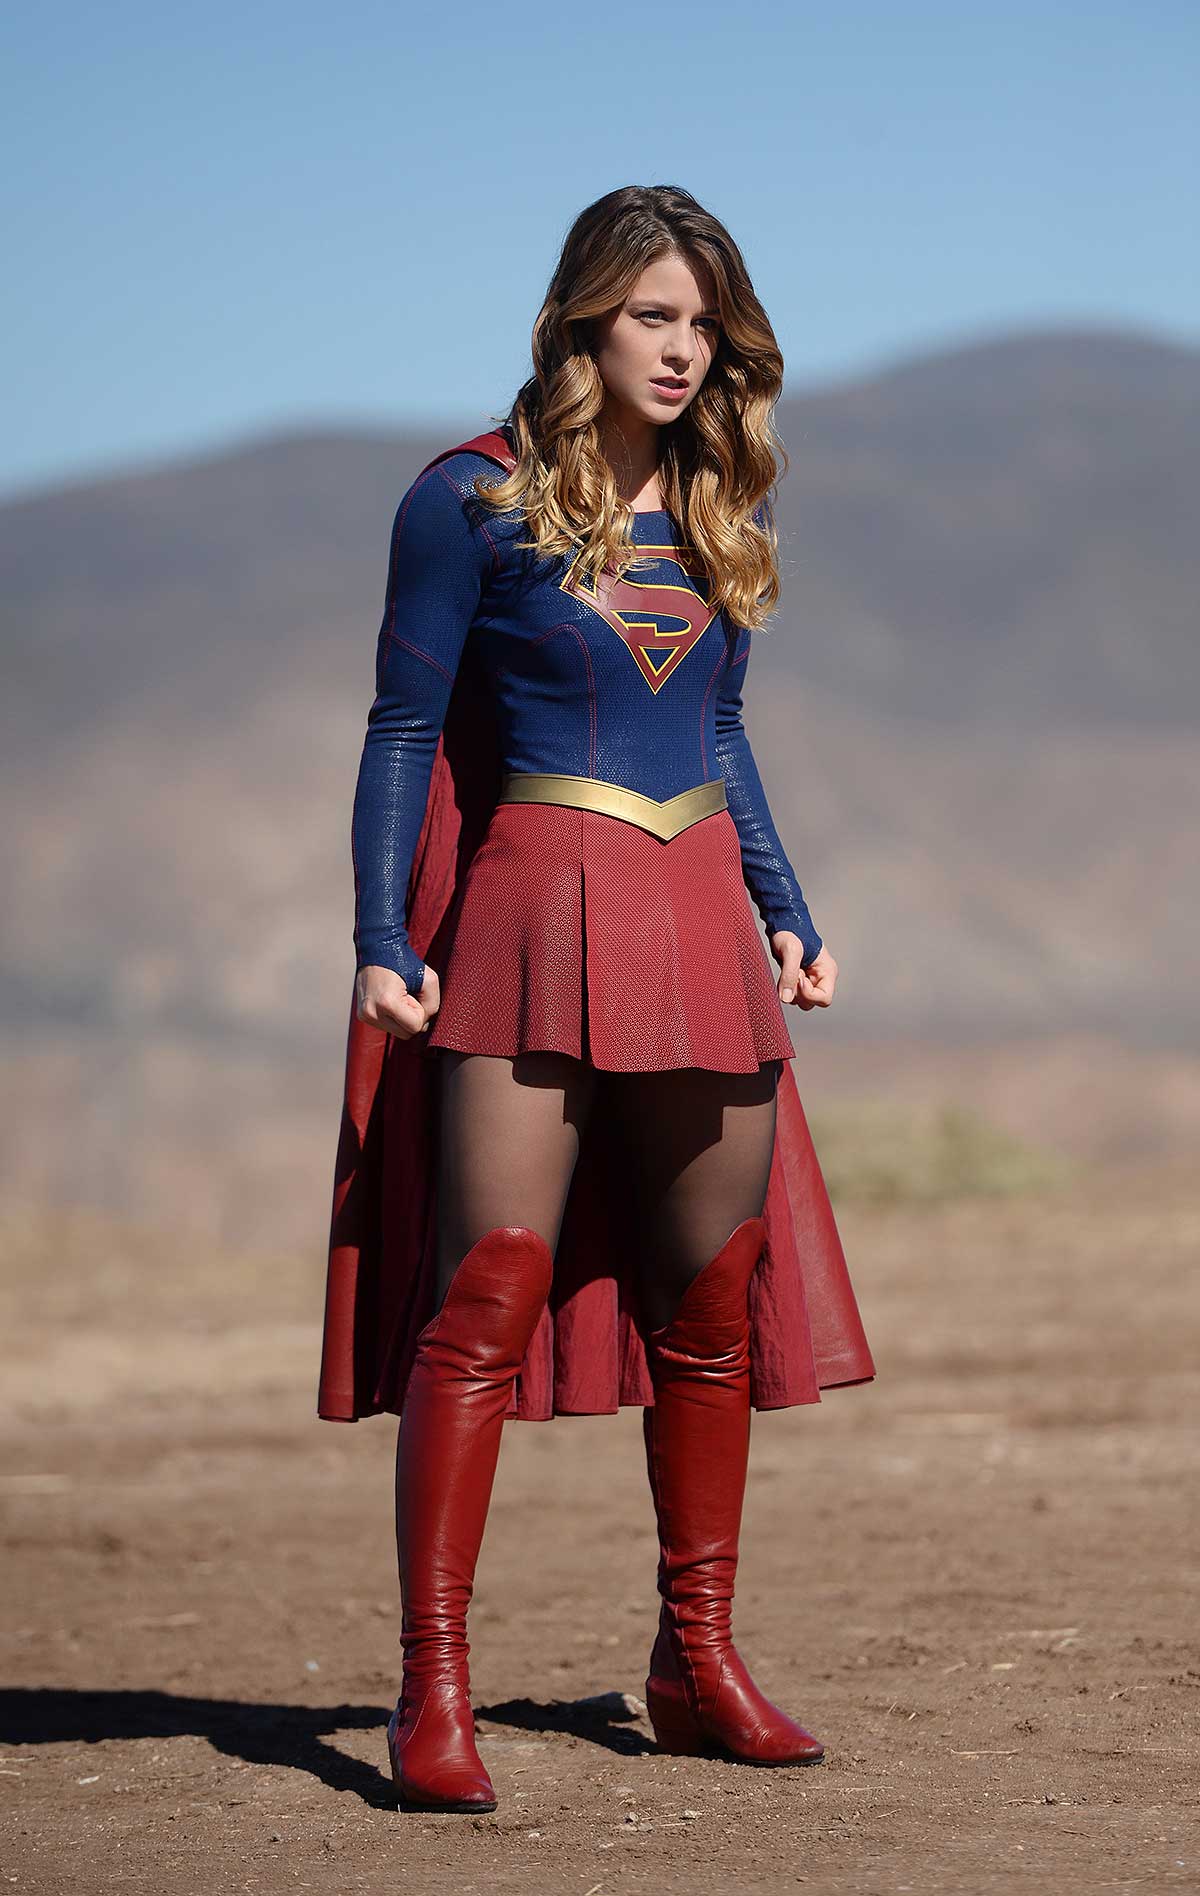 Supergirl - Saison 1